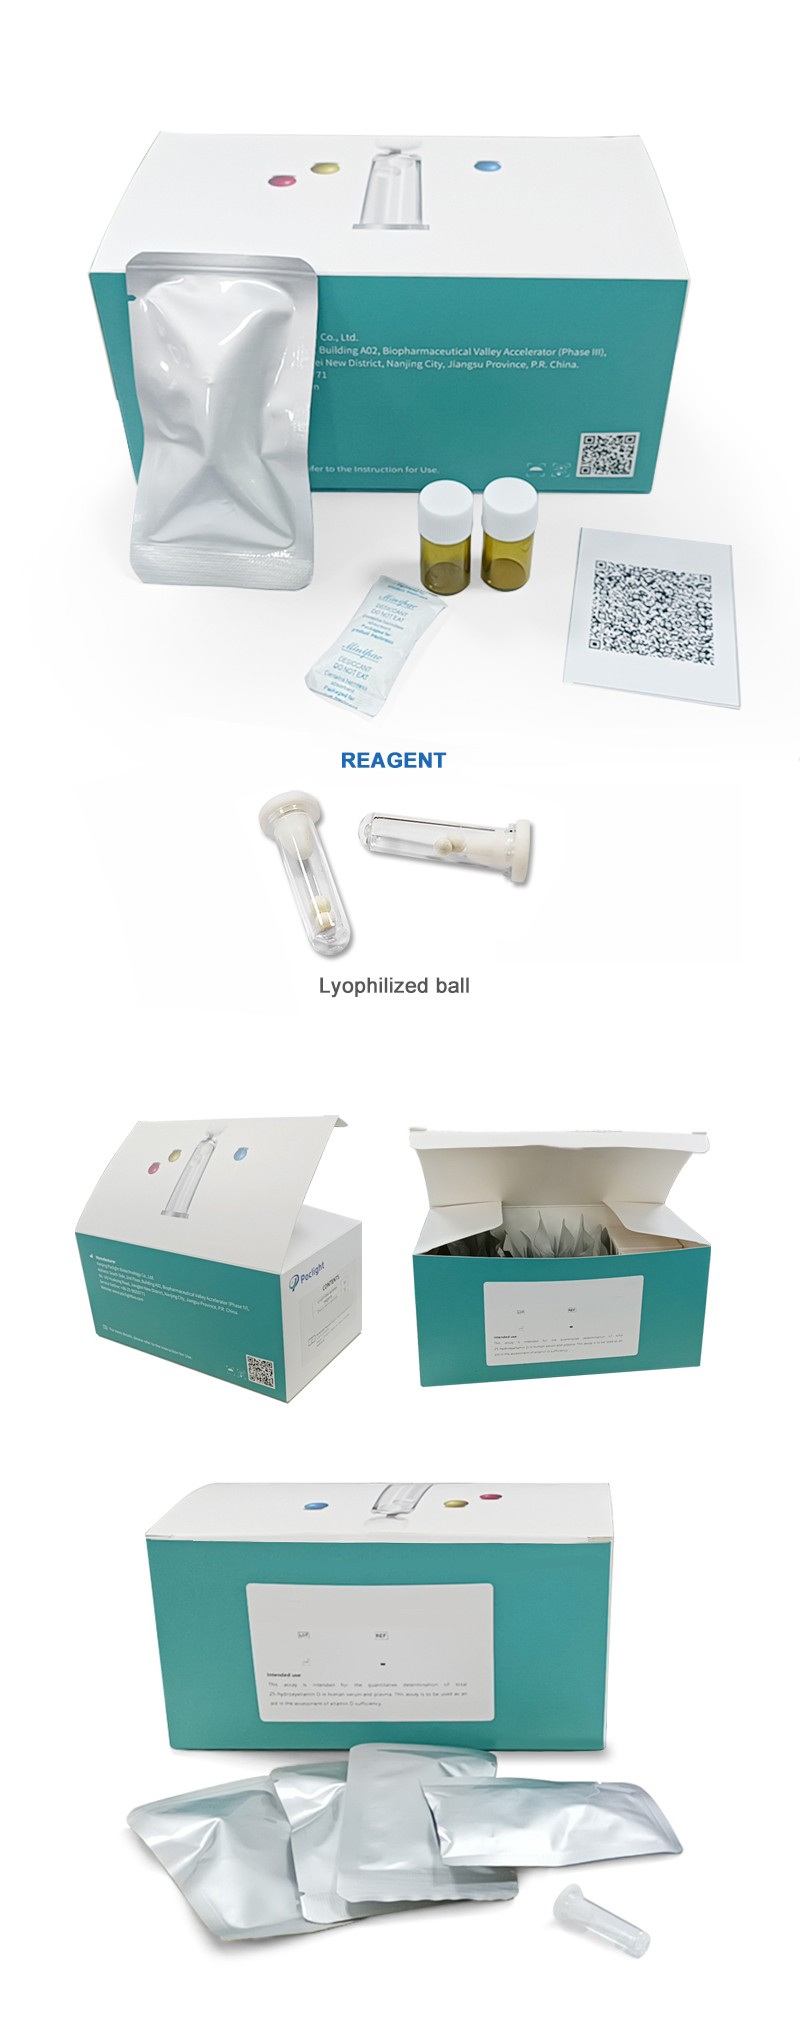 Free Thyroxine (FT4) Test Kit display